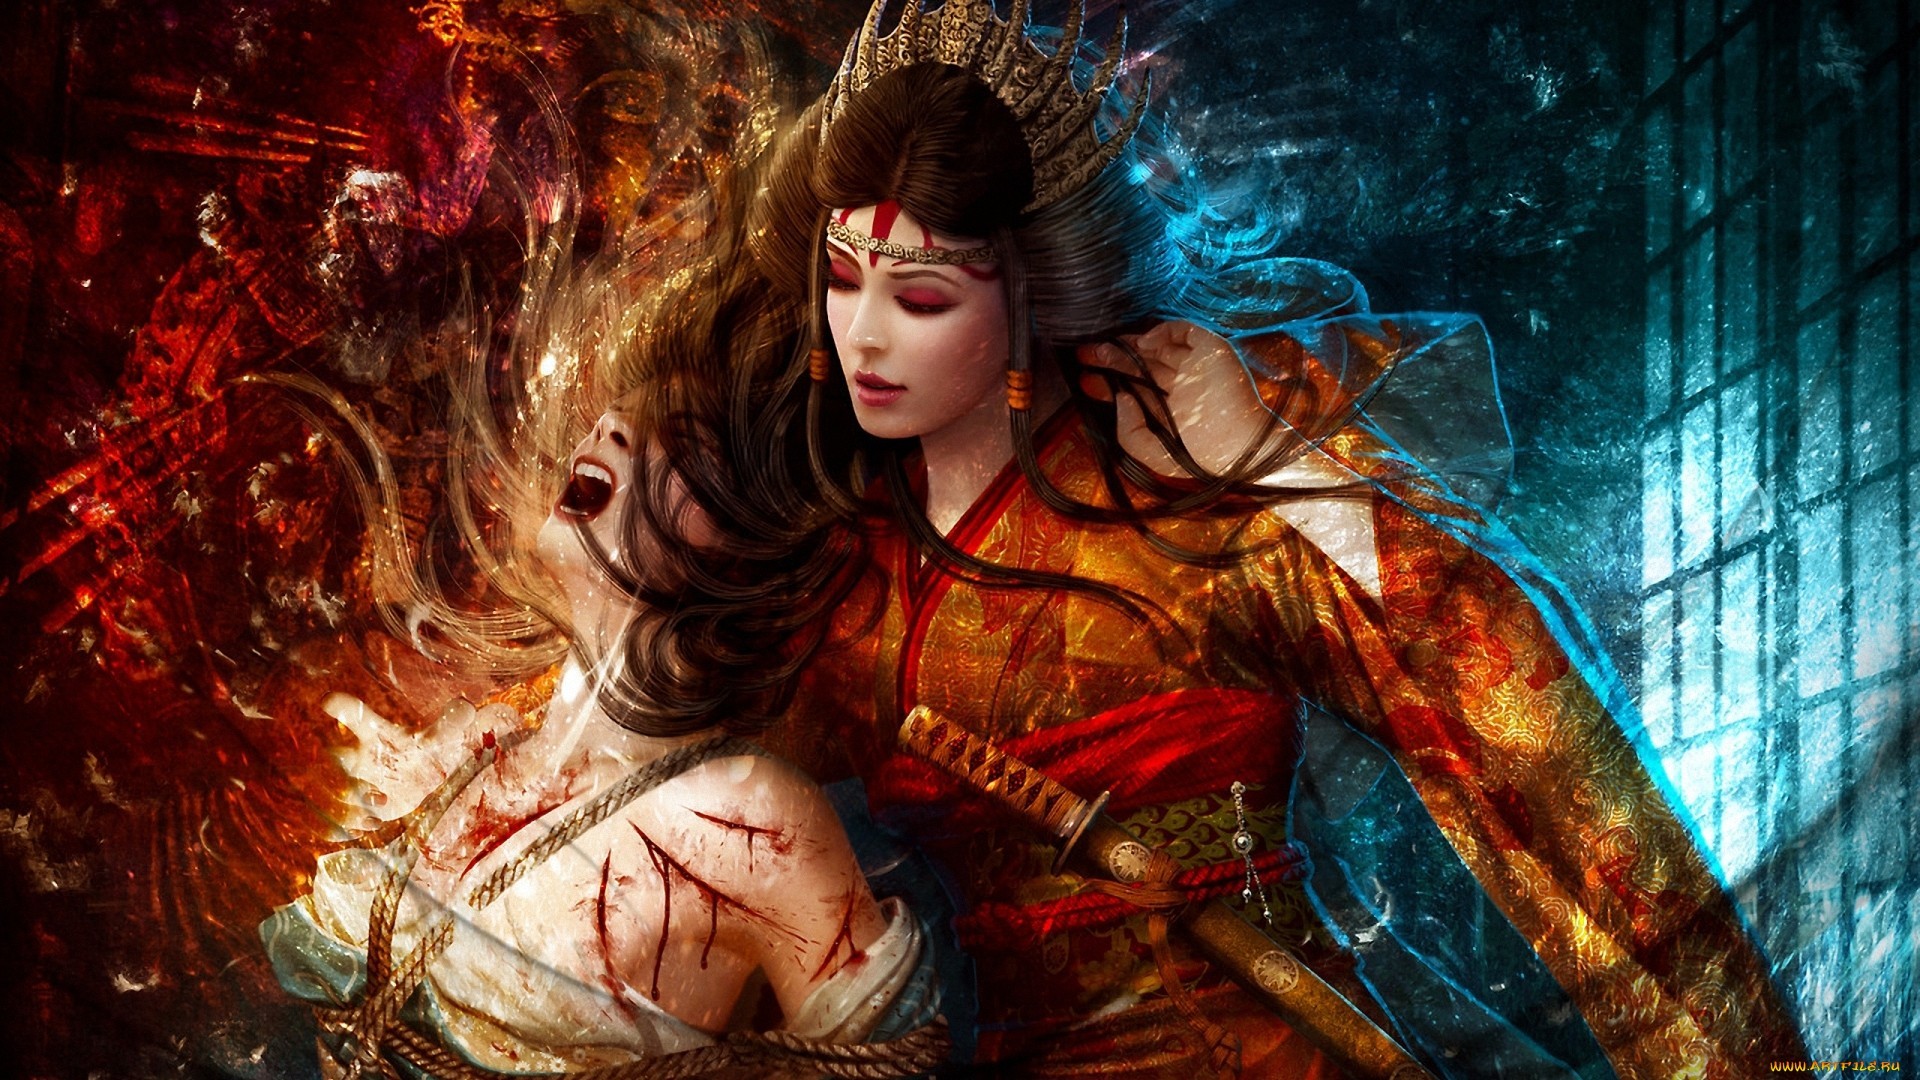 1920x1080 Fantasy art women females girls warrior weapons blood warrior wallpaper |   | 46147 | WallpaperUP